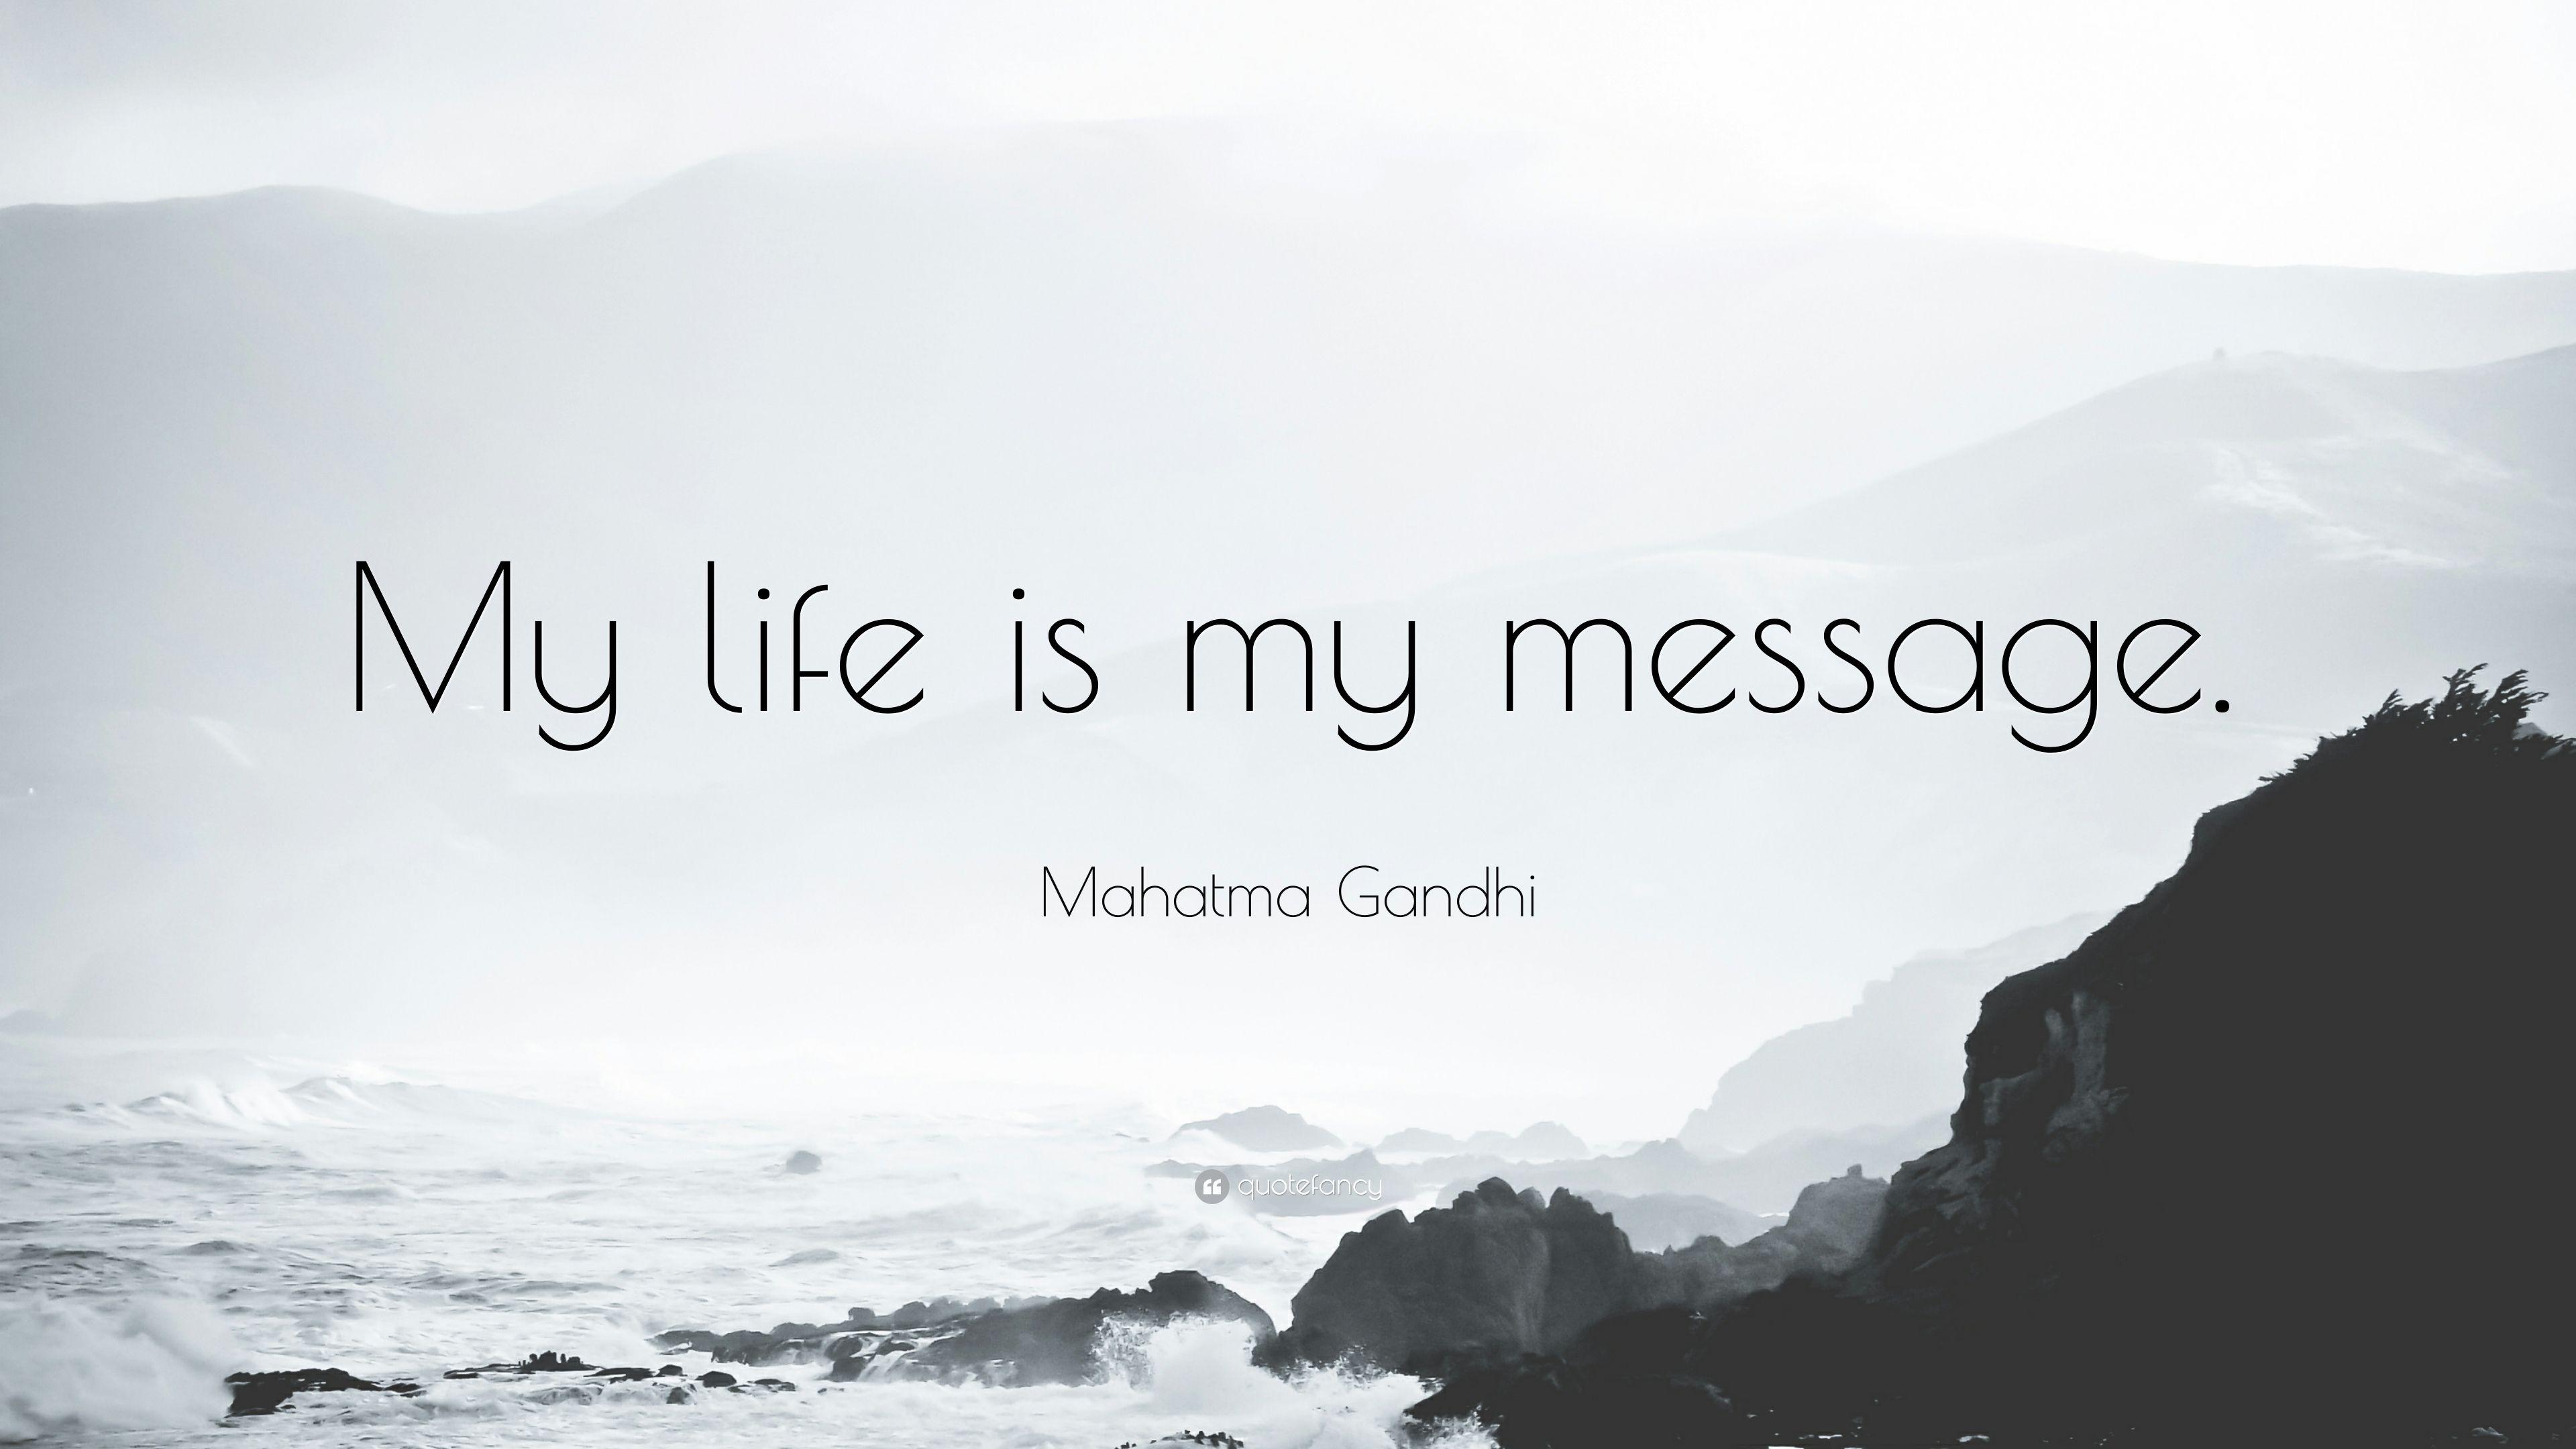 Mahatma Gandhi Quote: “My life is my message.” 20